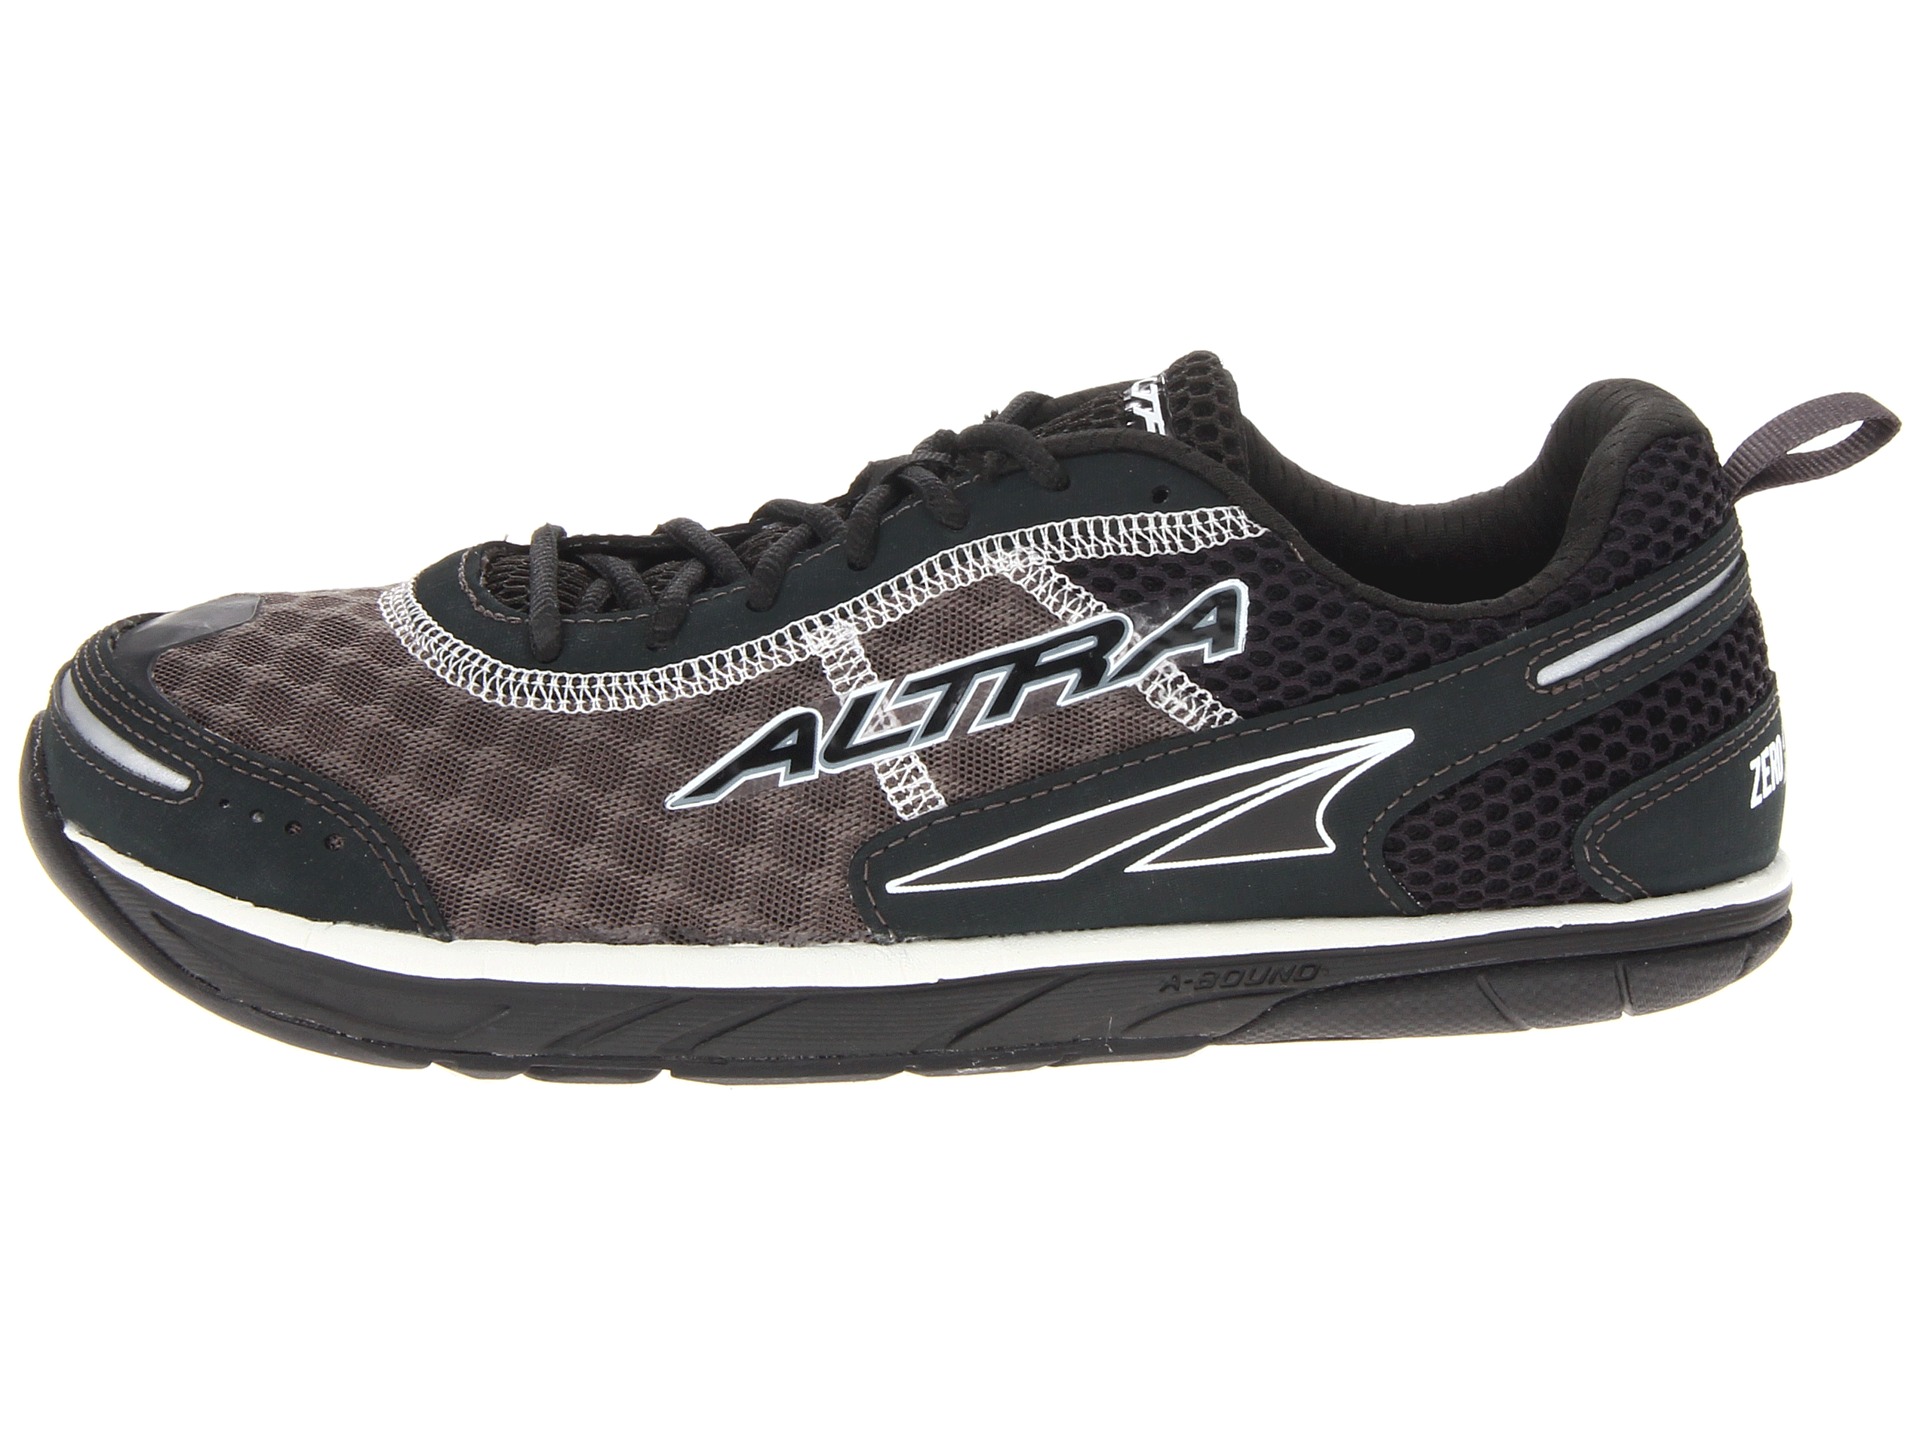 Altra Zero Drop Footwear Instinct 1 5 | Shipped Free at Zappos